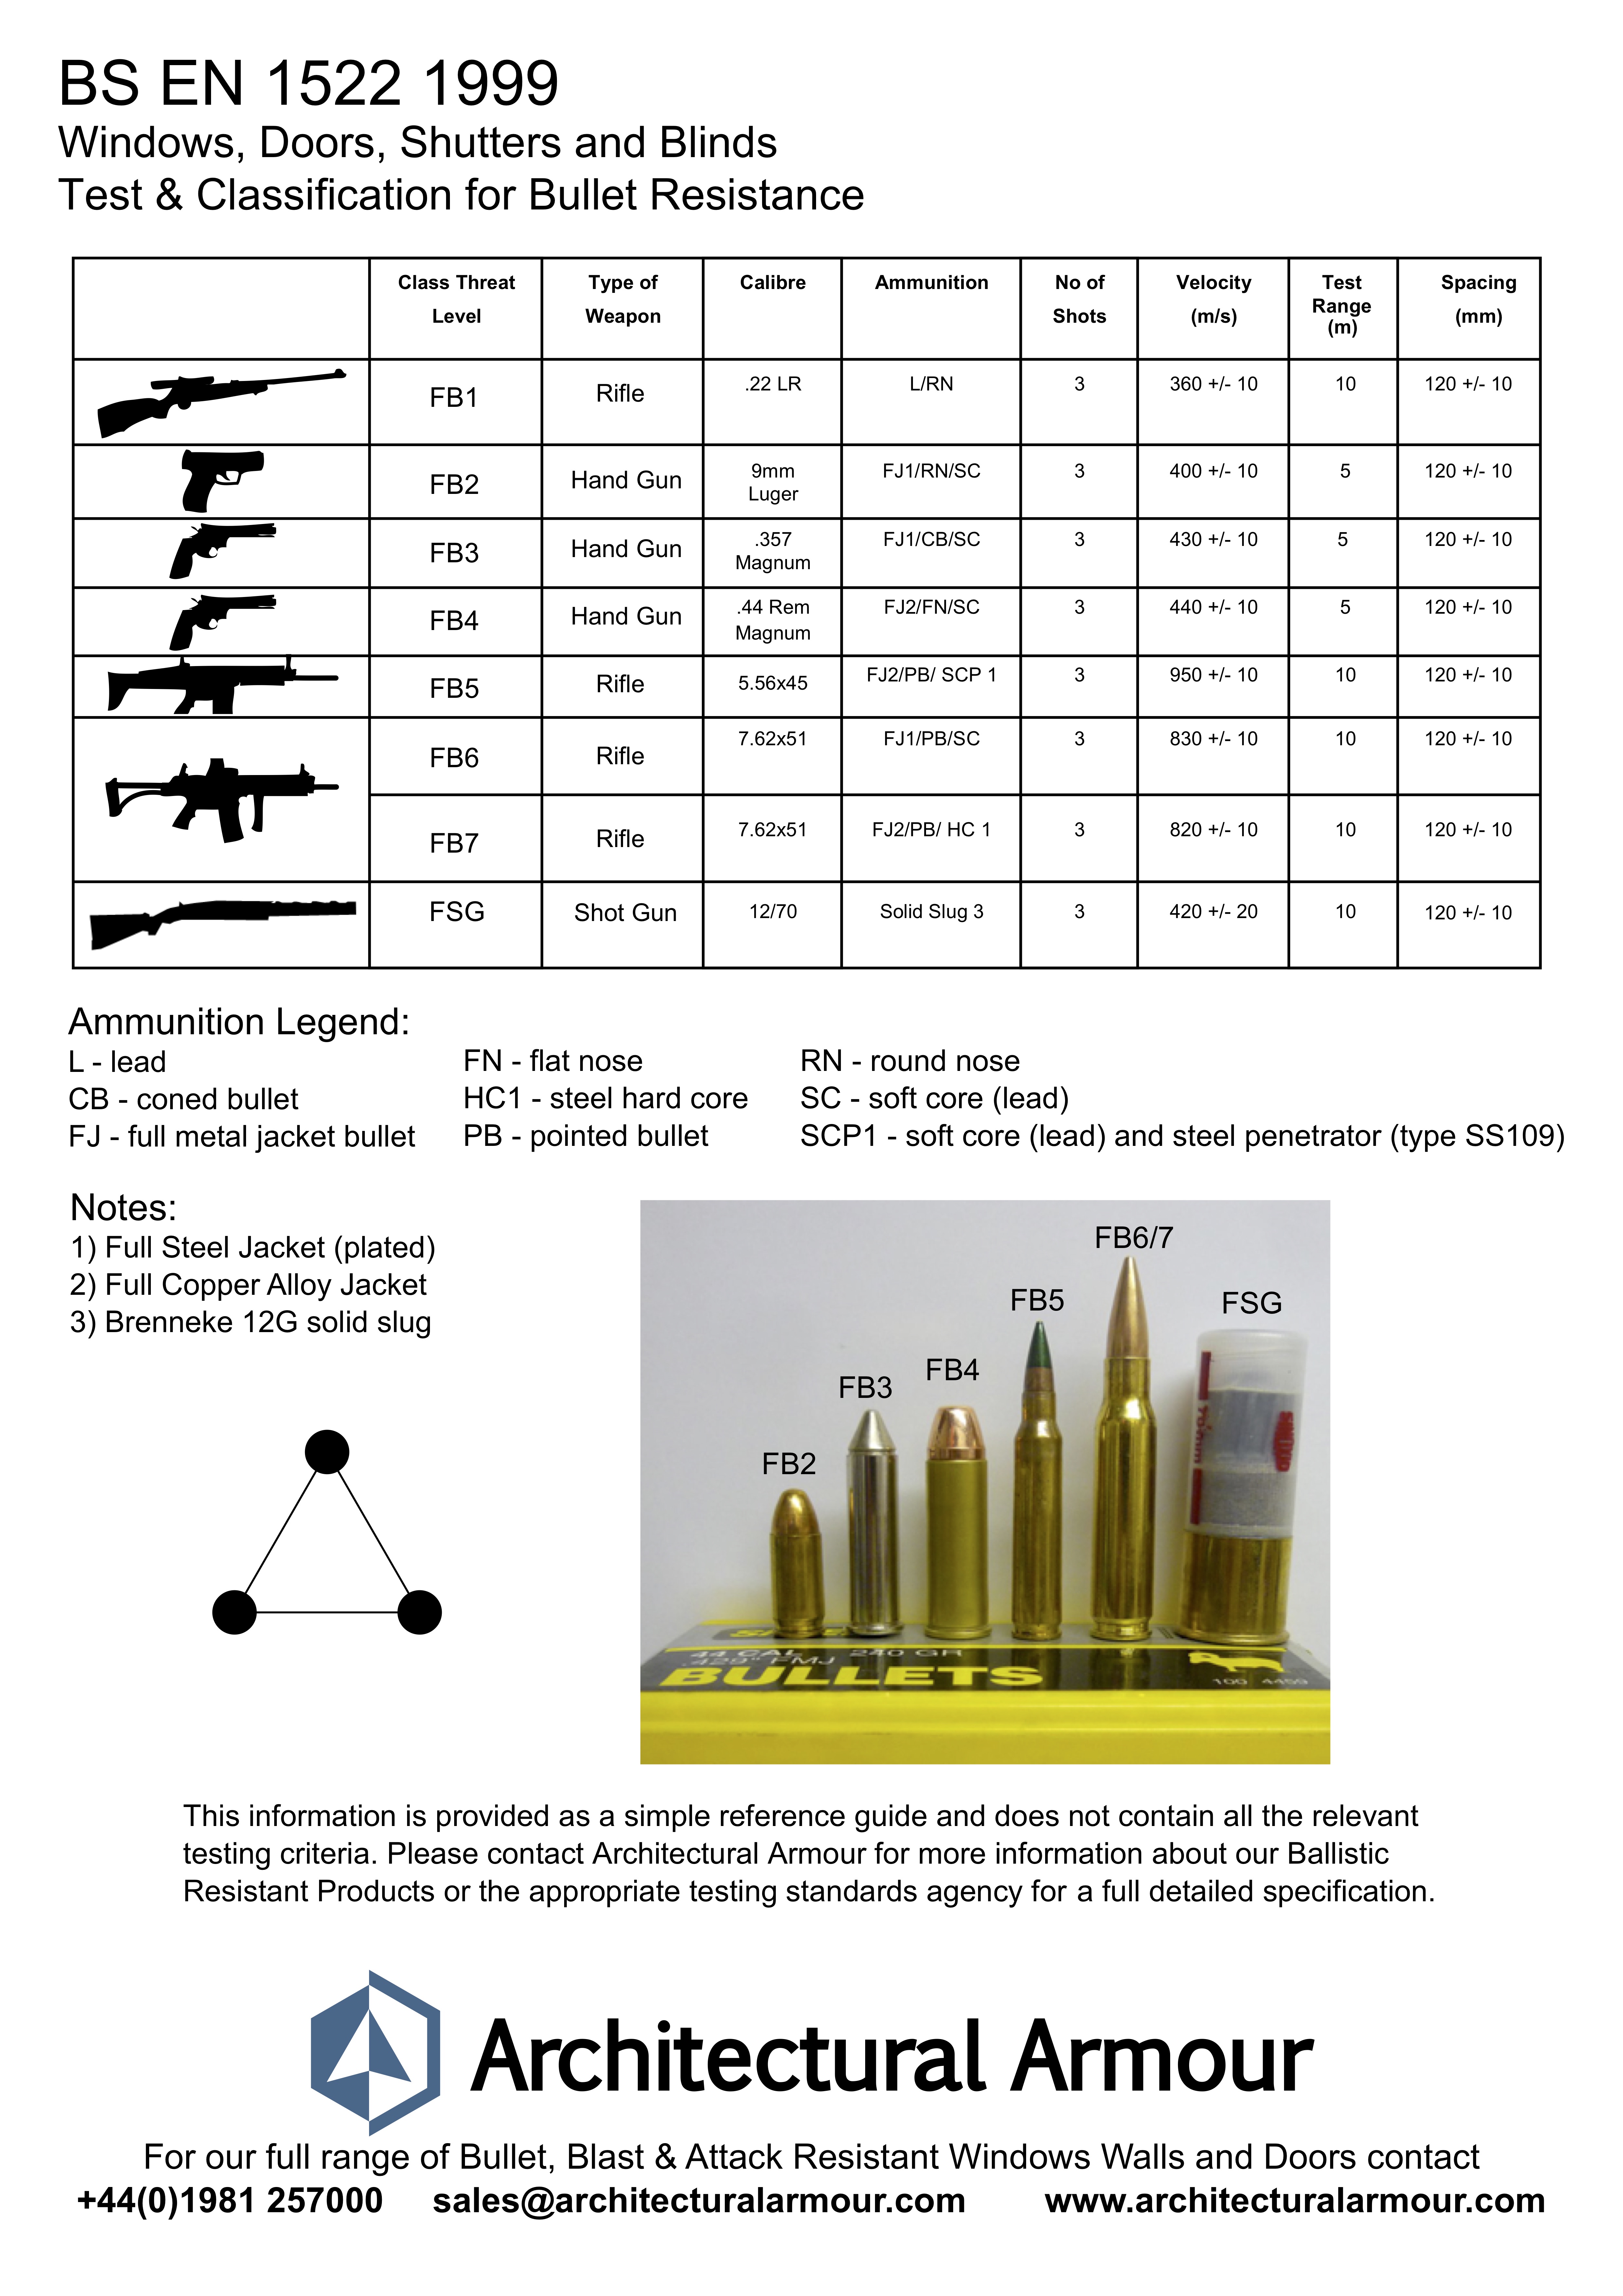 BS 1522 test classification for bullet windows doors